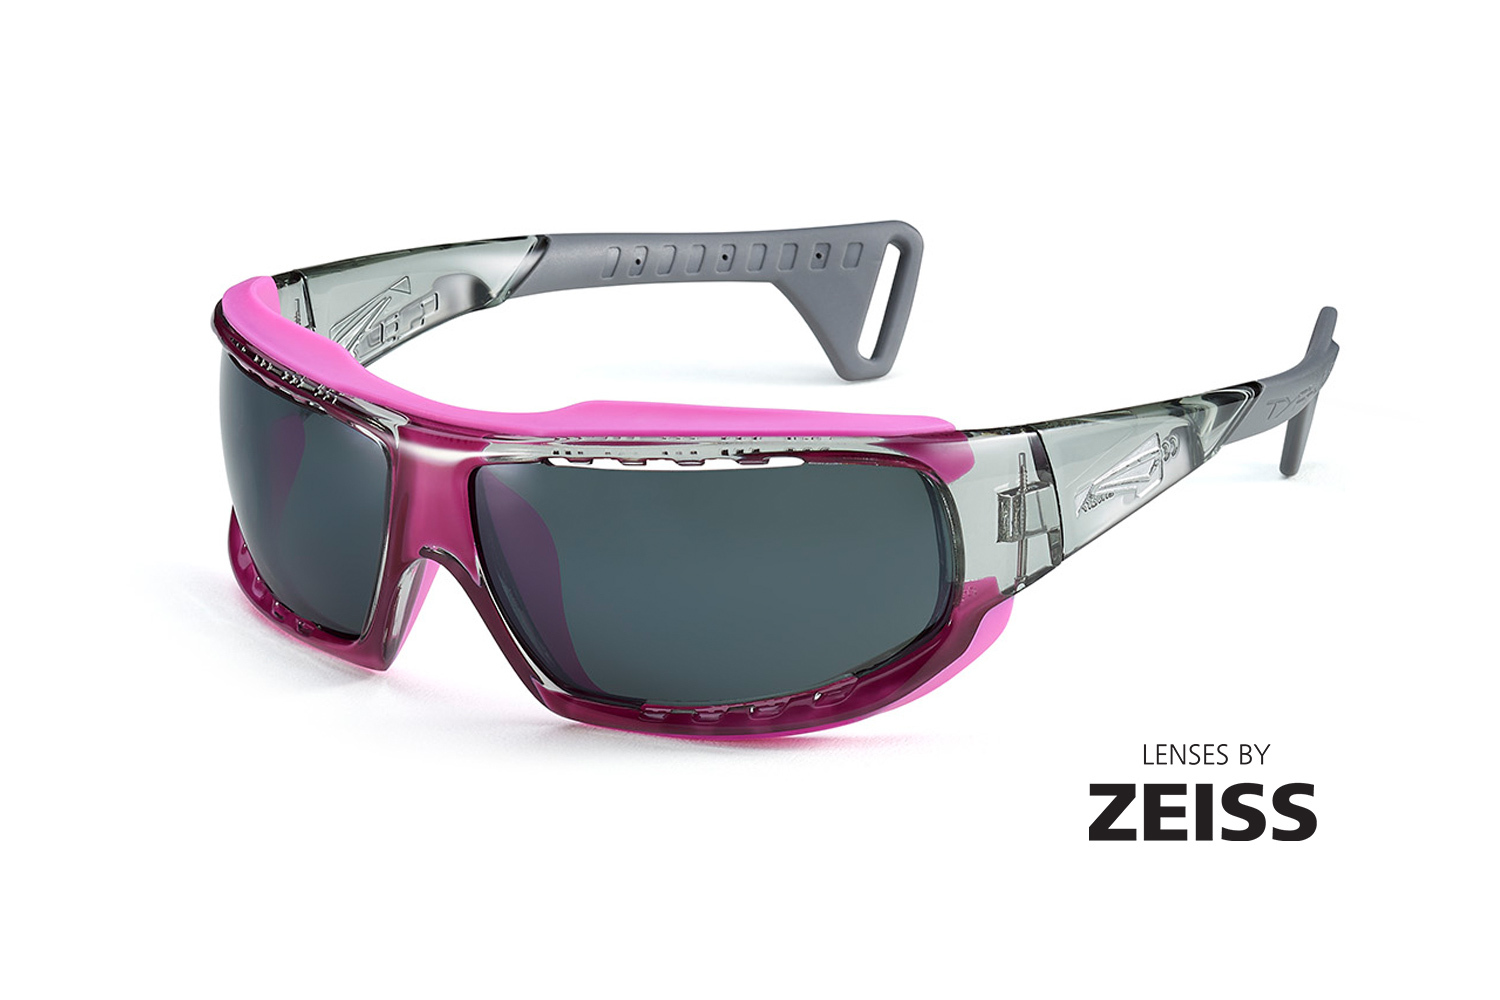 Купить Спортивные очки LiP Typhoon / Gloss Trans. Grey / Pink / Zeiss/ PA Polarized / Tri-Pel Methane Smoke 7ft.ru в интернет магазине Семь Футов